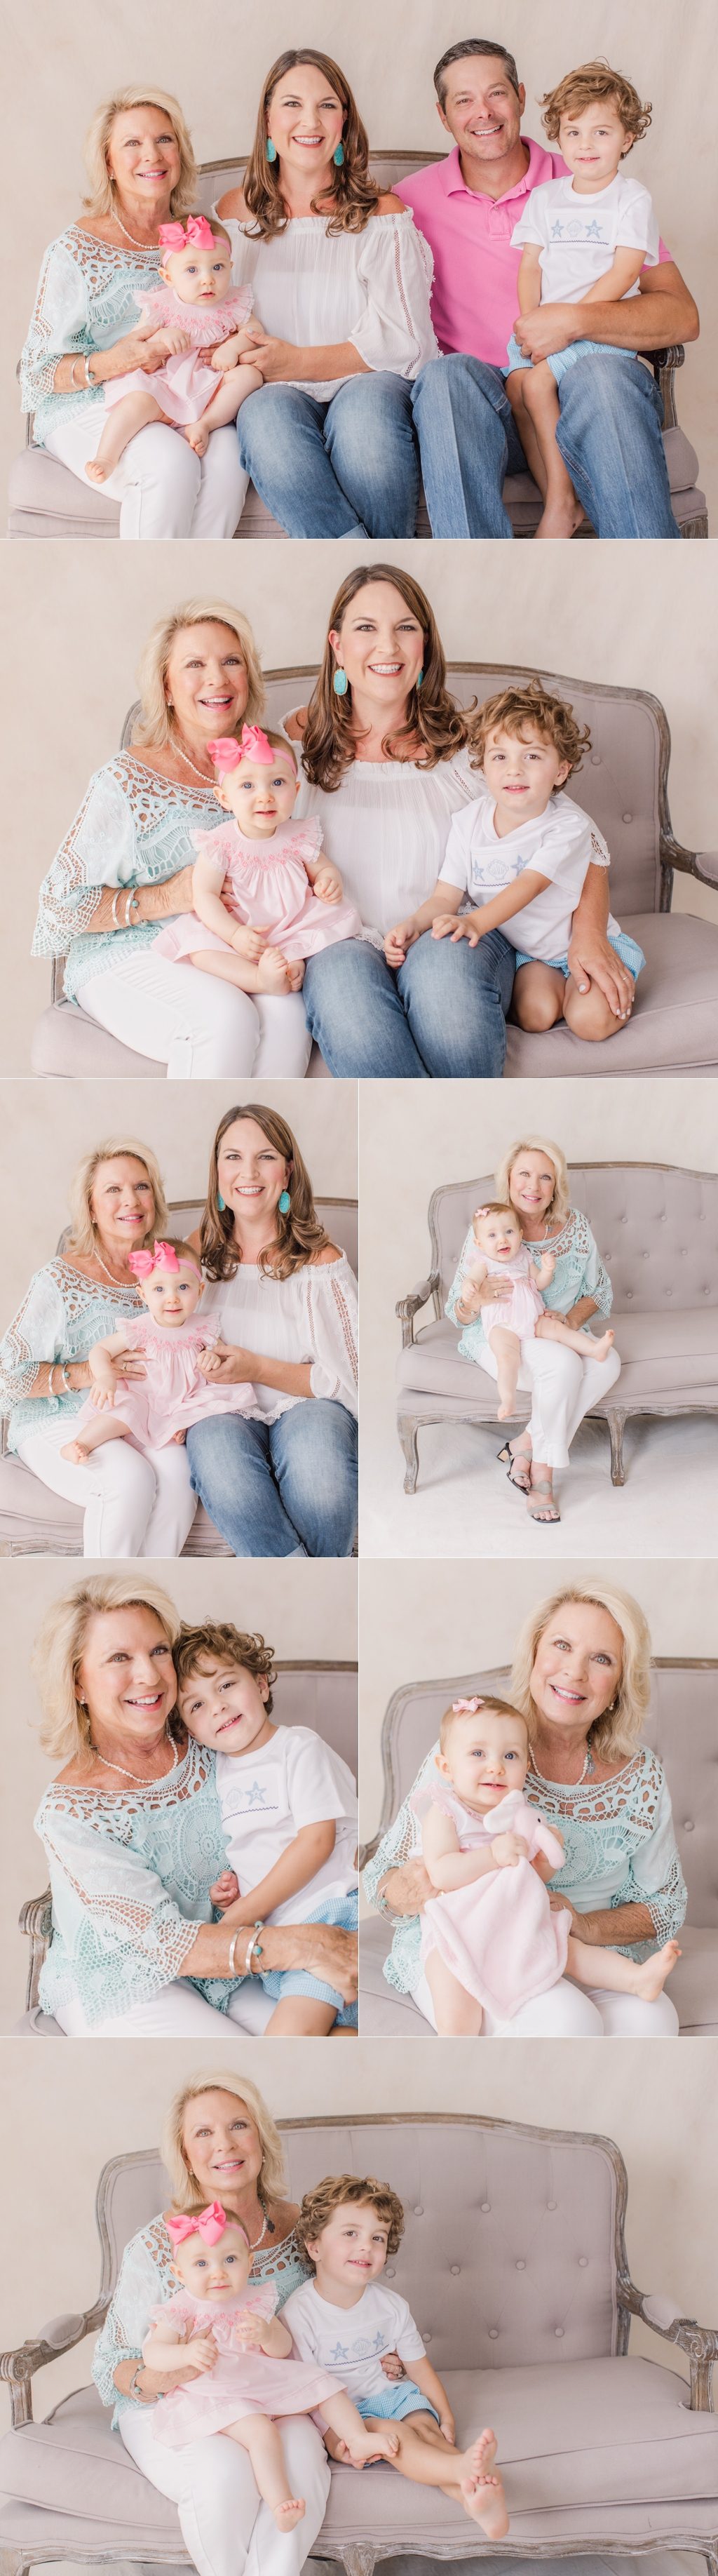 Multi-generational baby photography in studio near Atlanta.